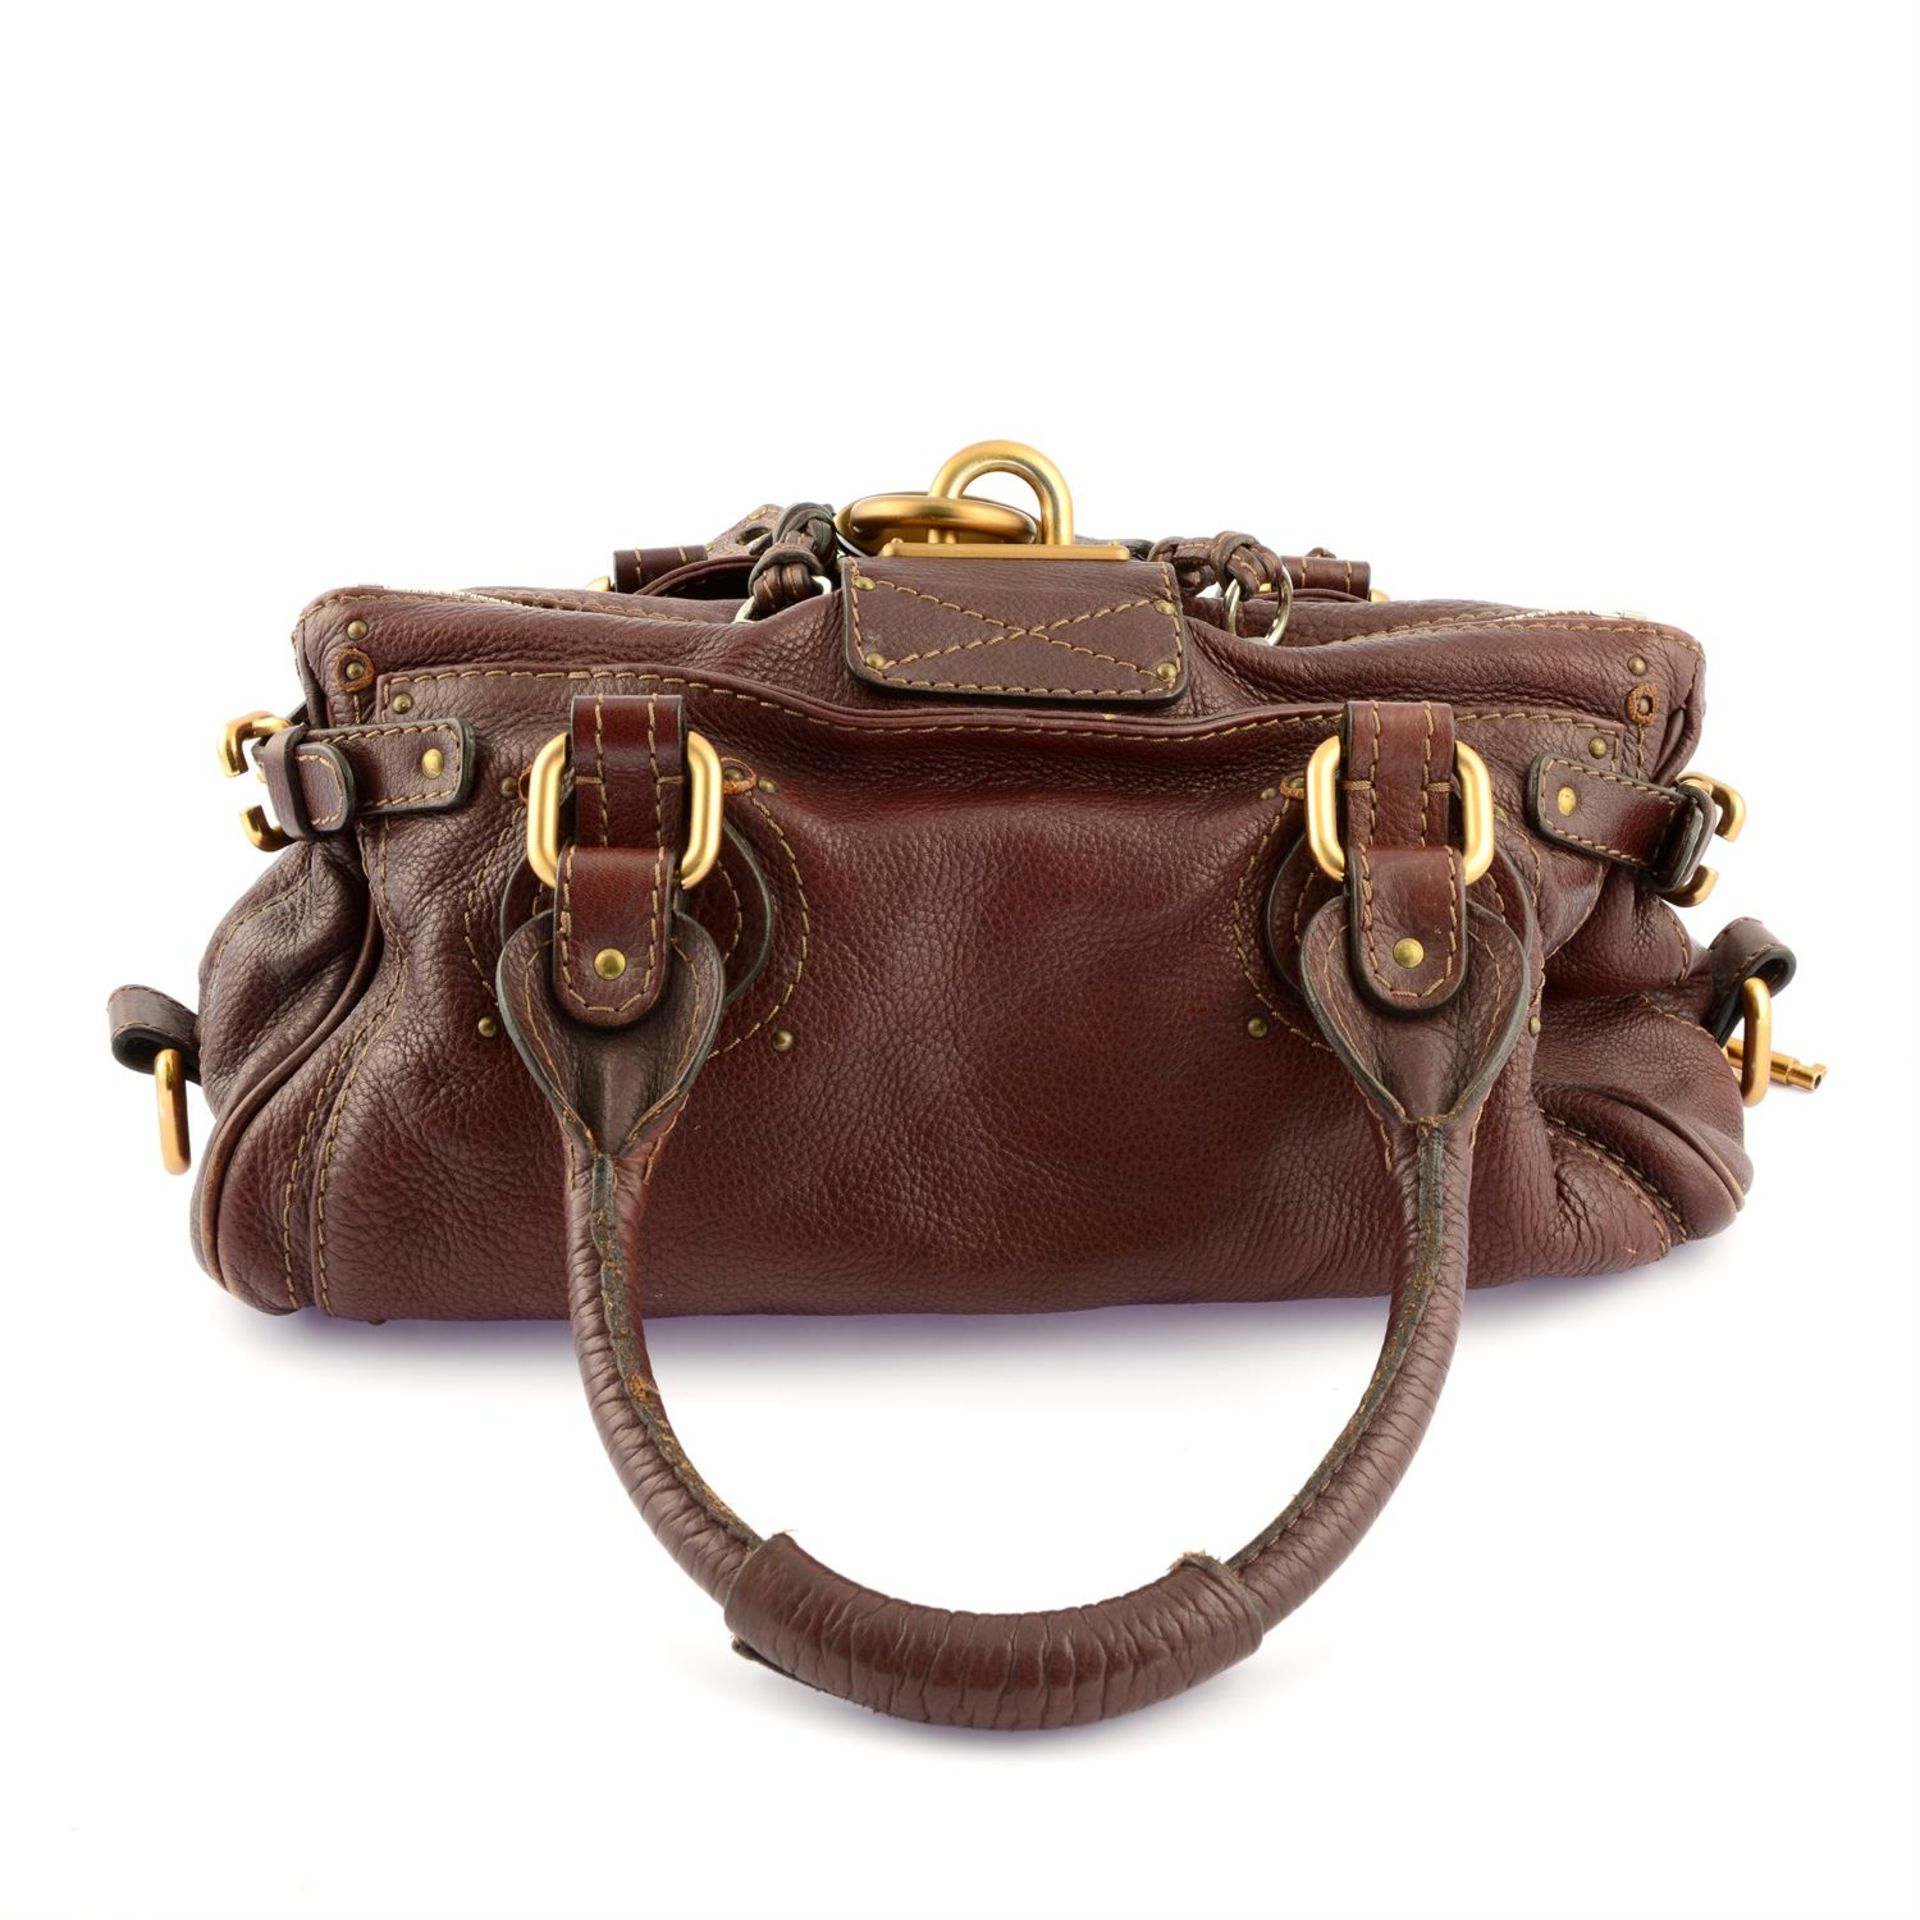 CHLOÉ - a brown leather Paddington handbag. - Bild 2 aus 5